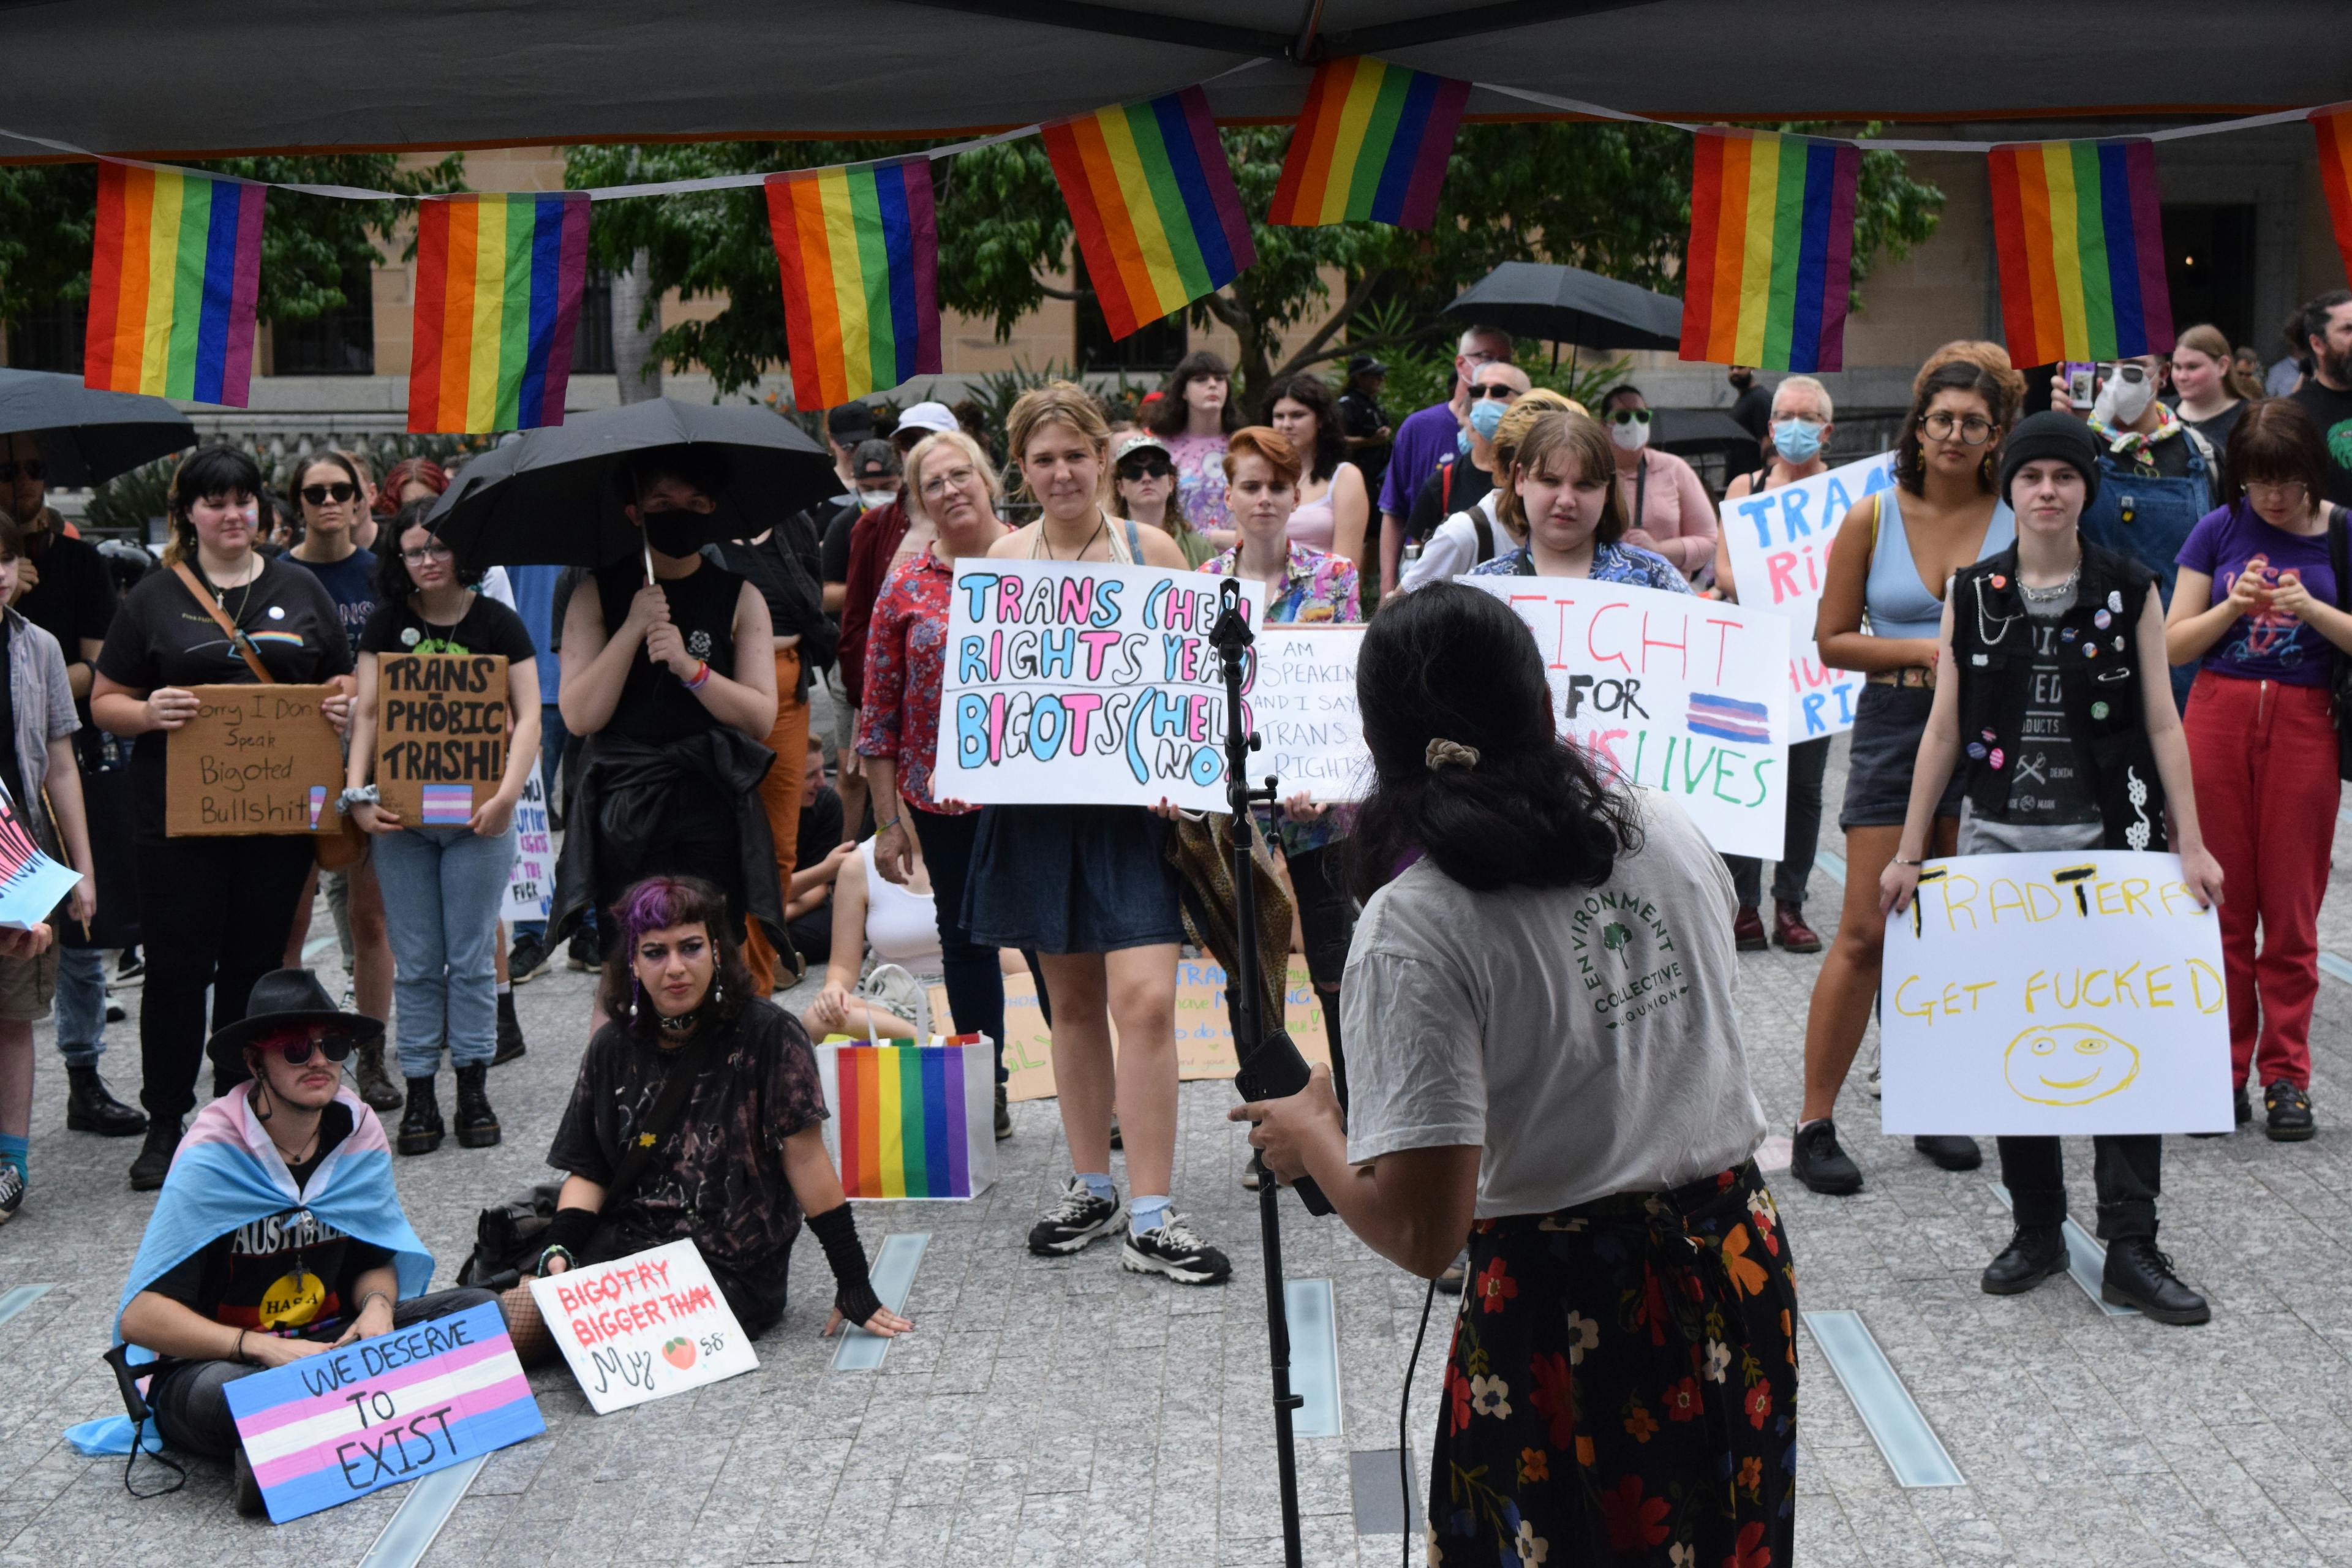 Sydney and Brisbane say no to transphobia